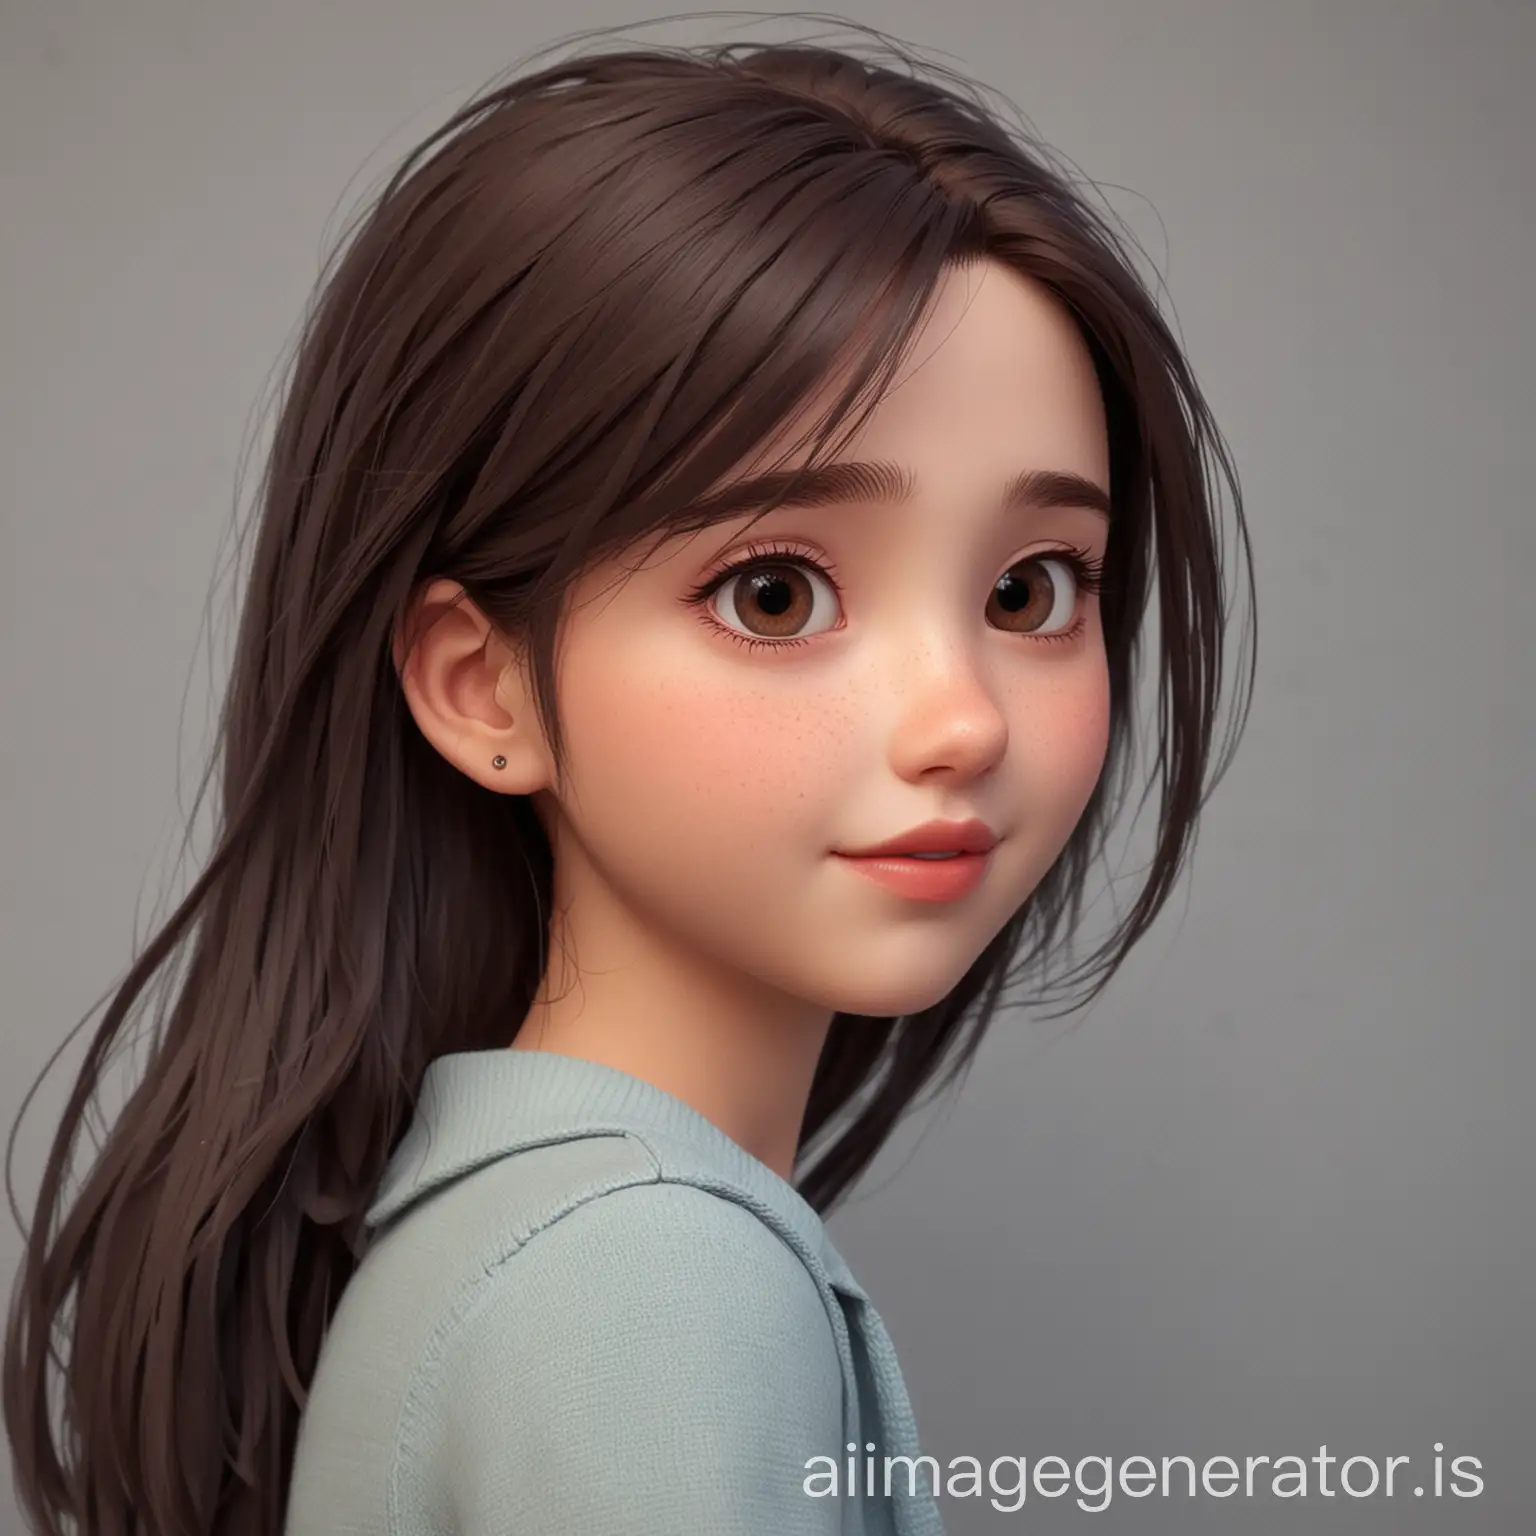 a girl animated